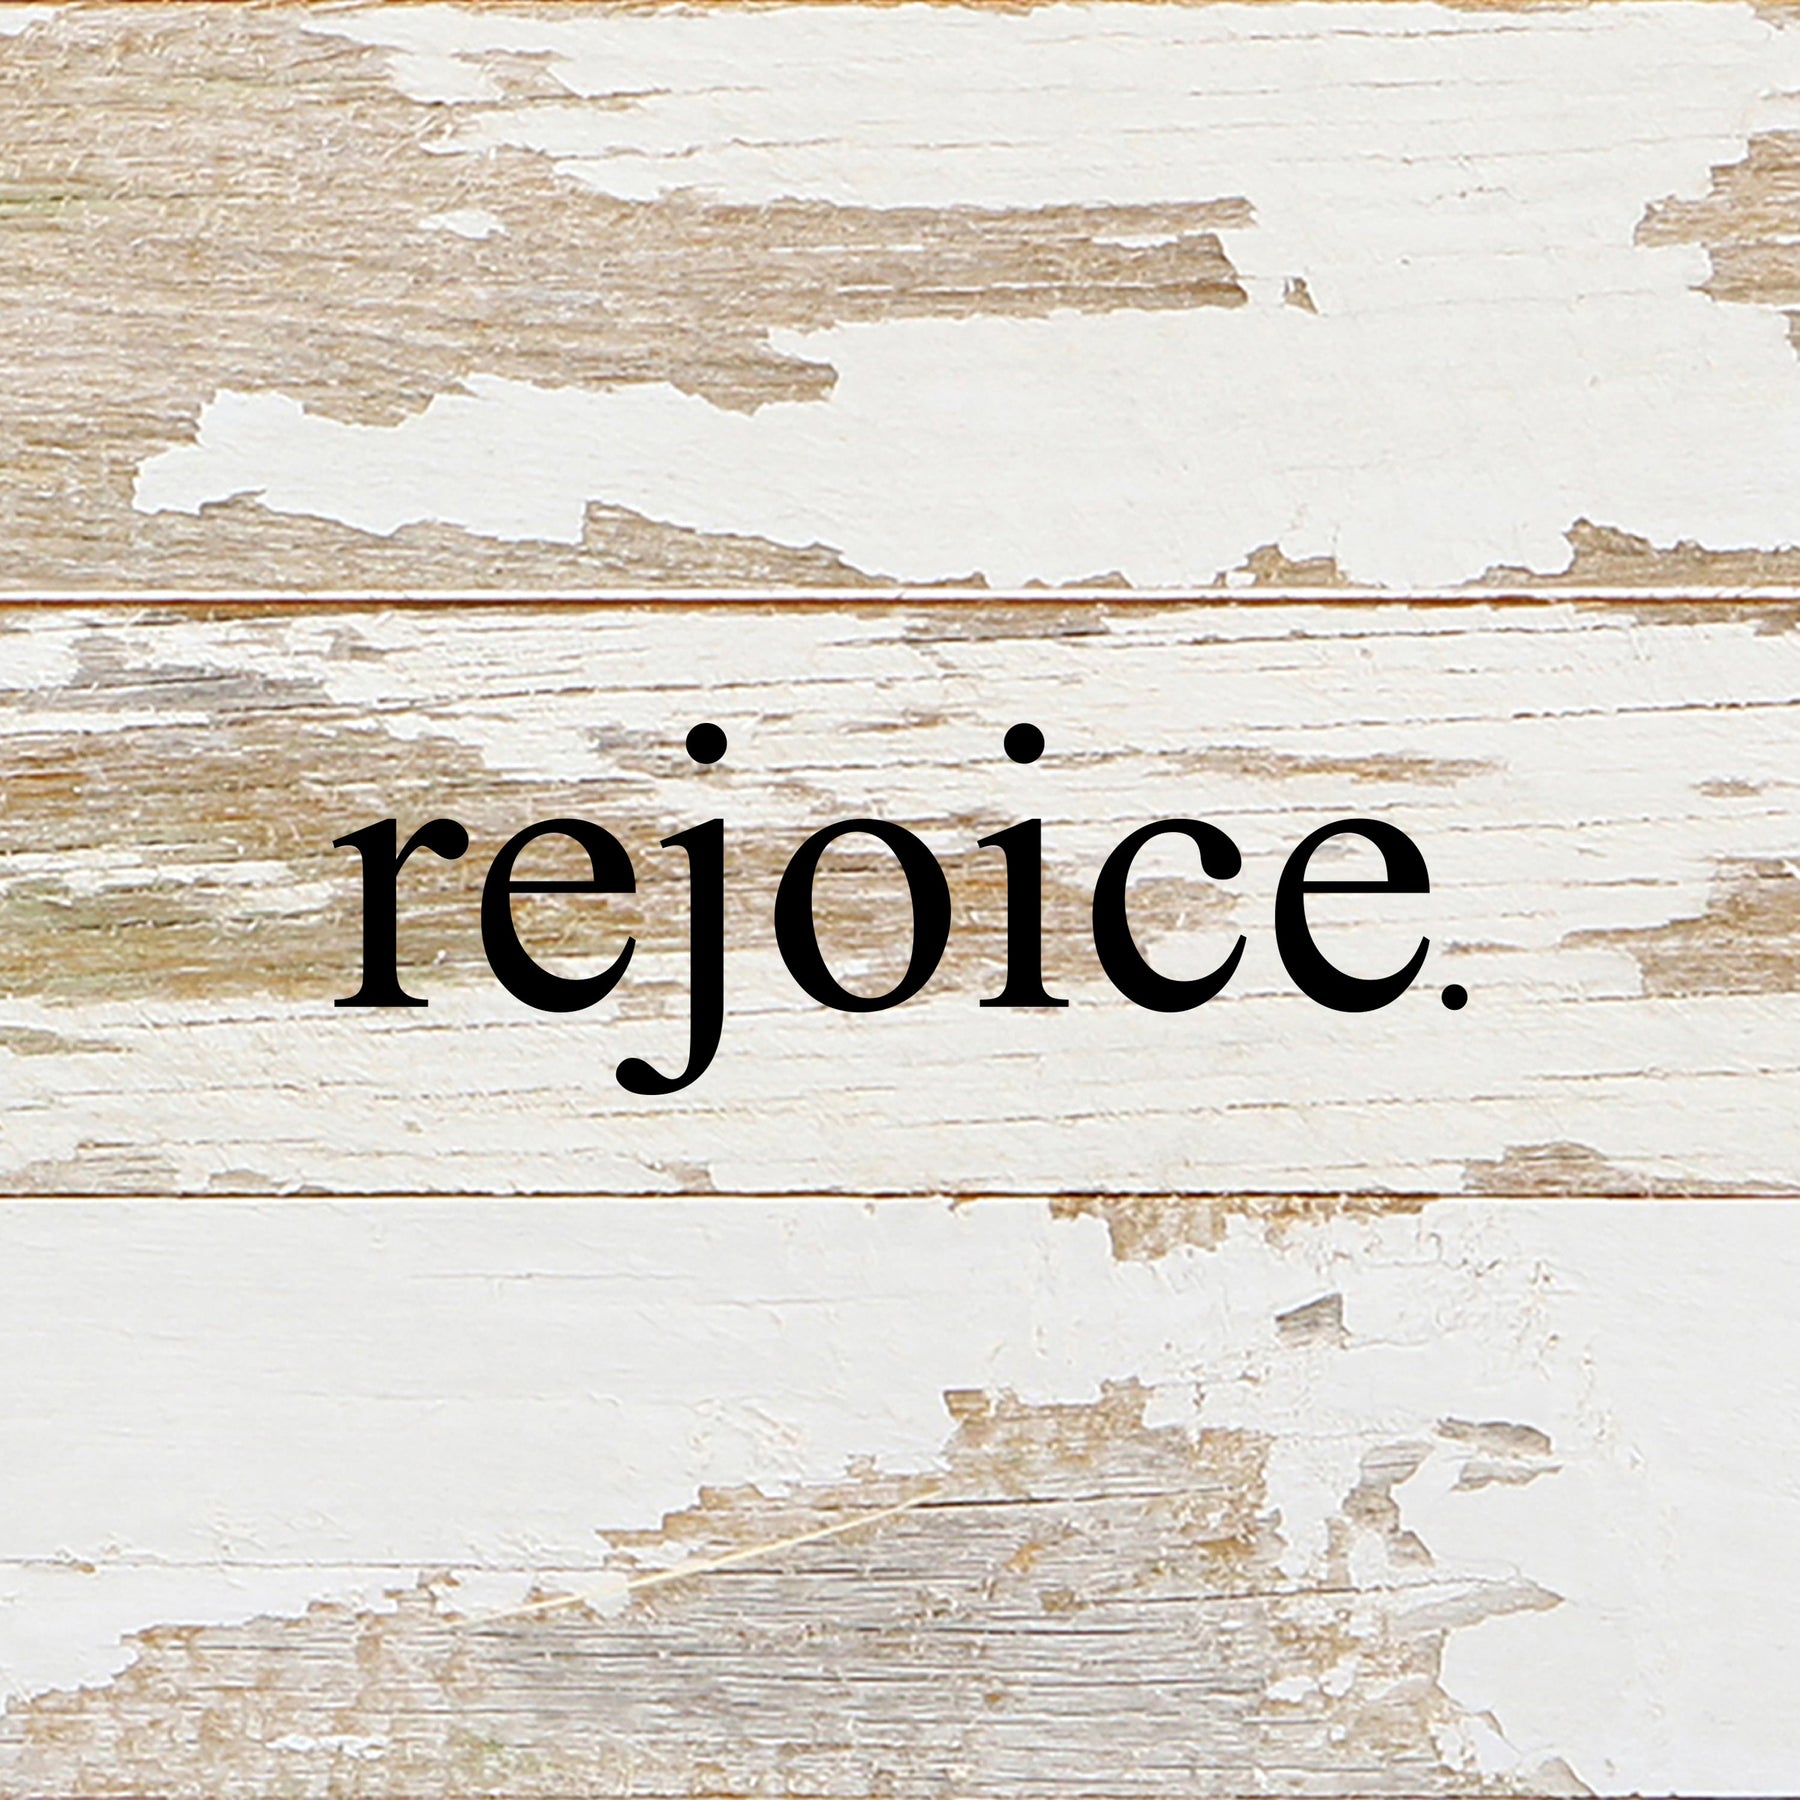 Rejoice / 6"x6" Reclaimed Wood Sign